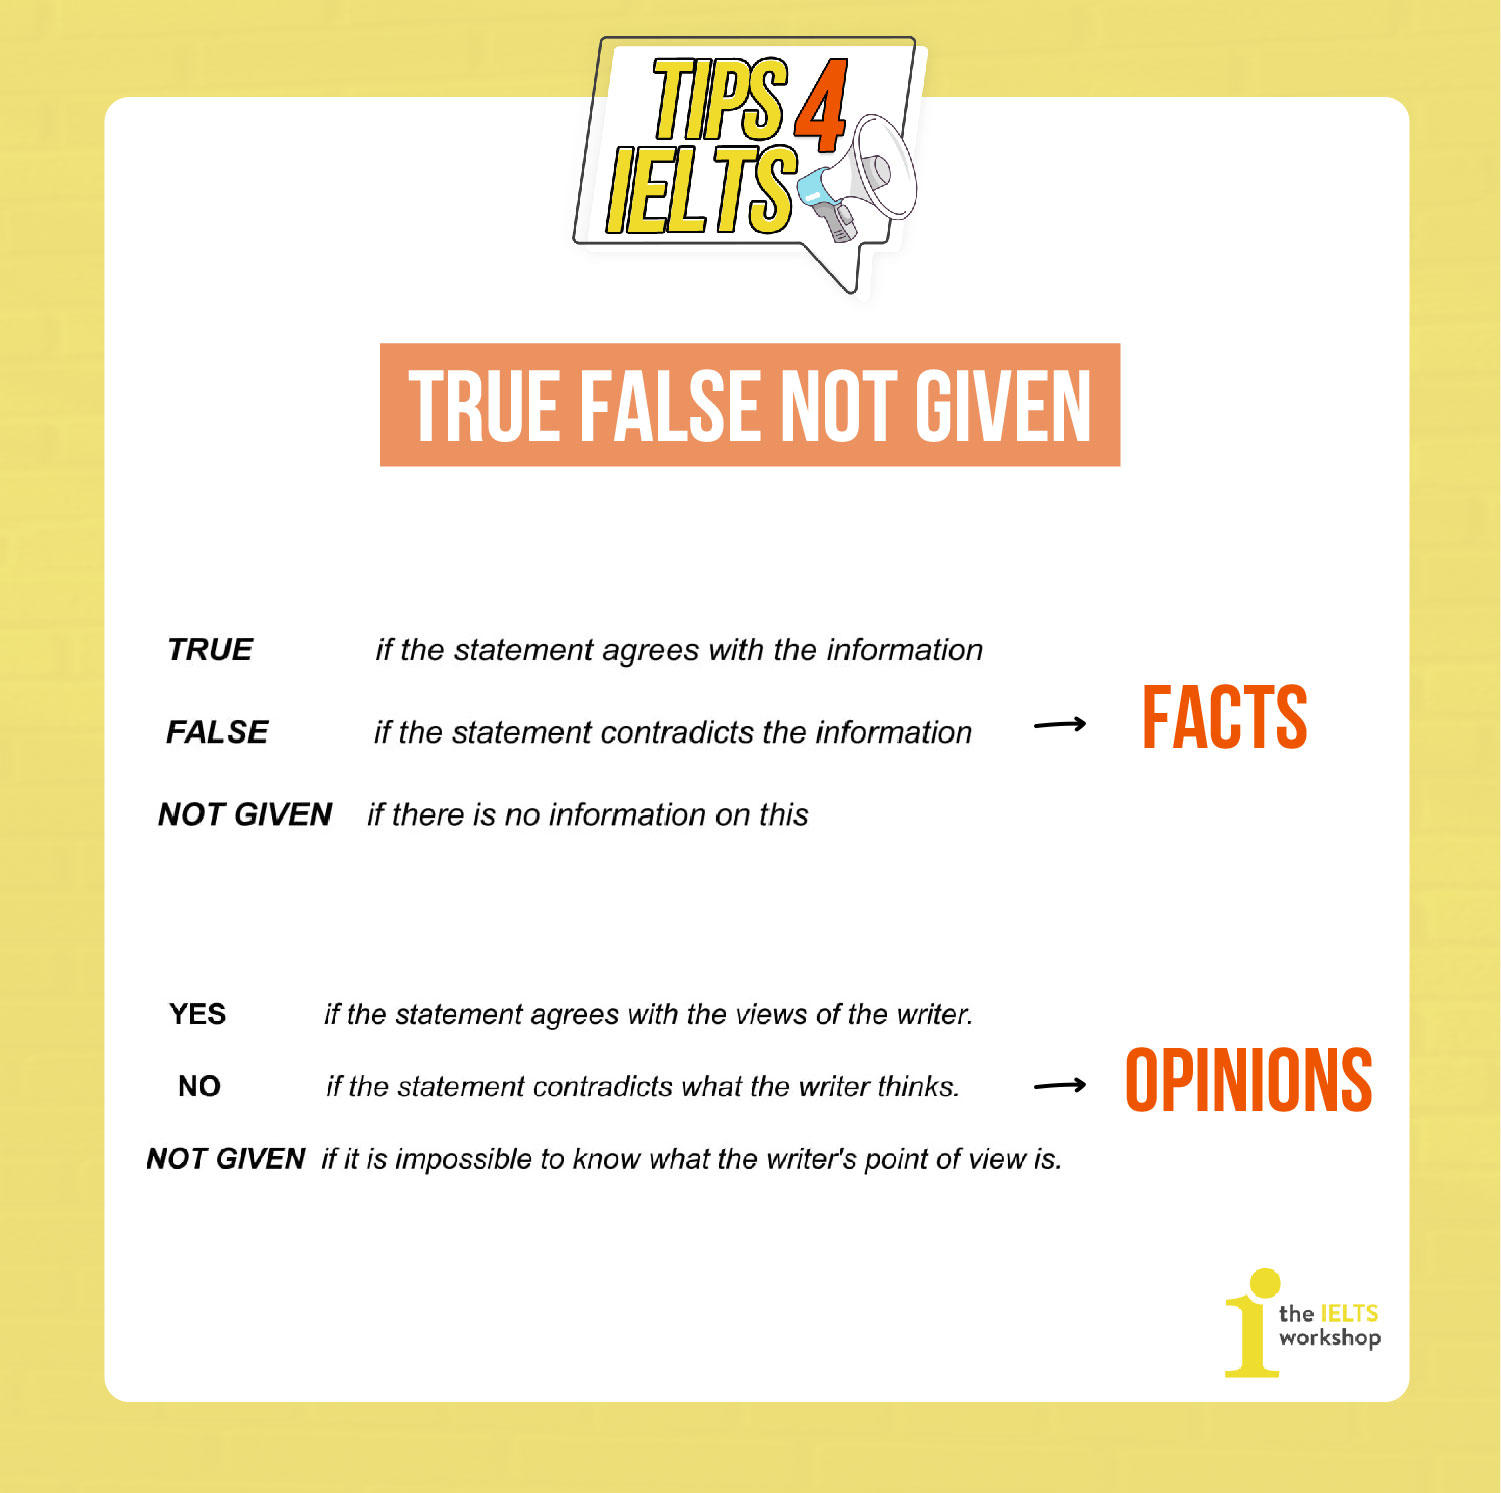 True false 5 класс. IELTS reading true false not given. True false not given. True false not given exercises IELTS. IELTS reading true false Test.